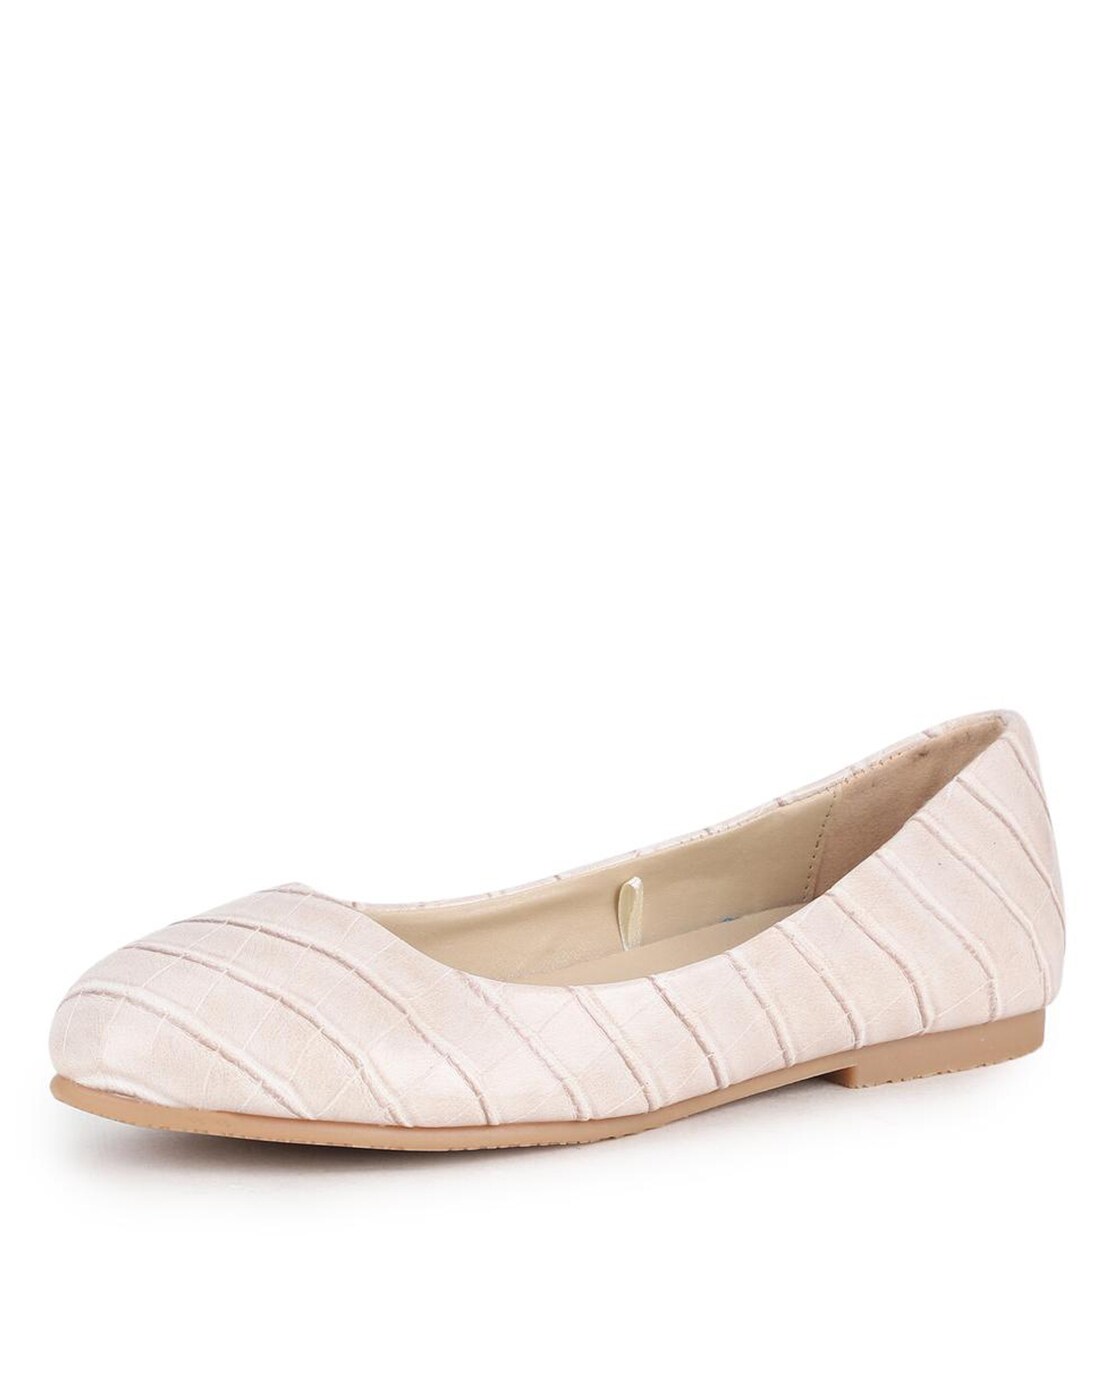 Buy Beige Flat Shoes for Women by VAN 